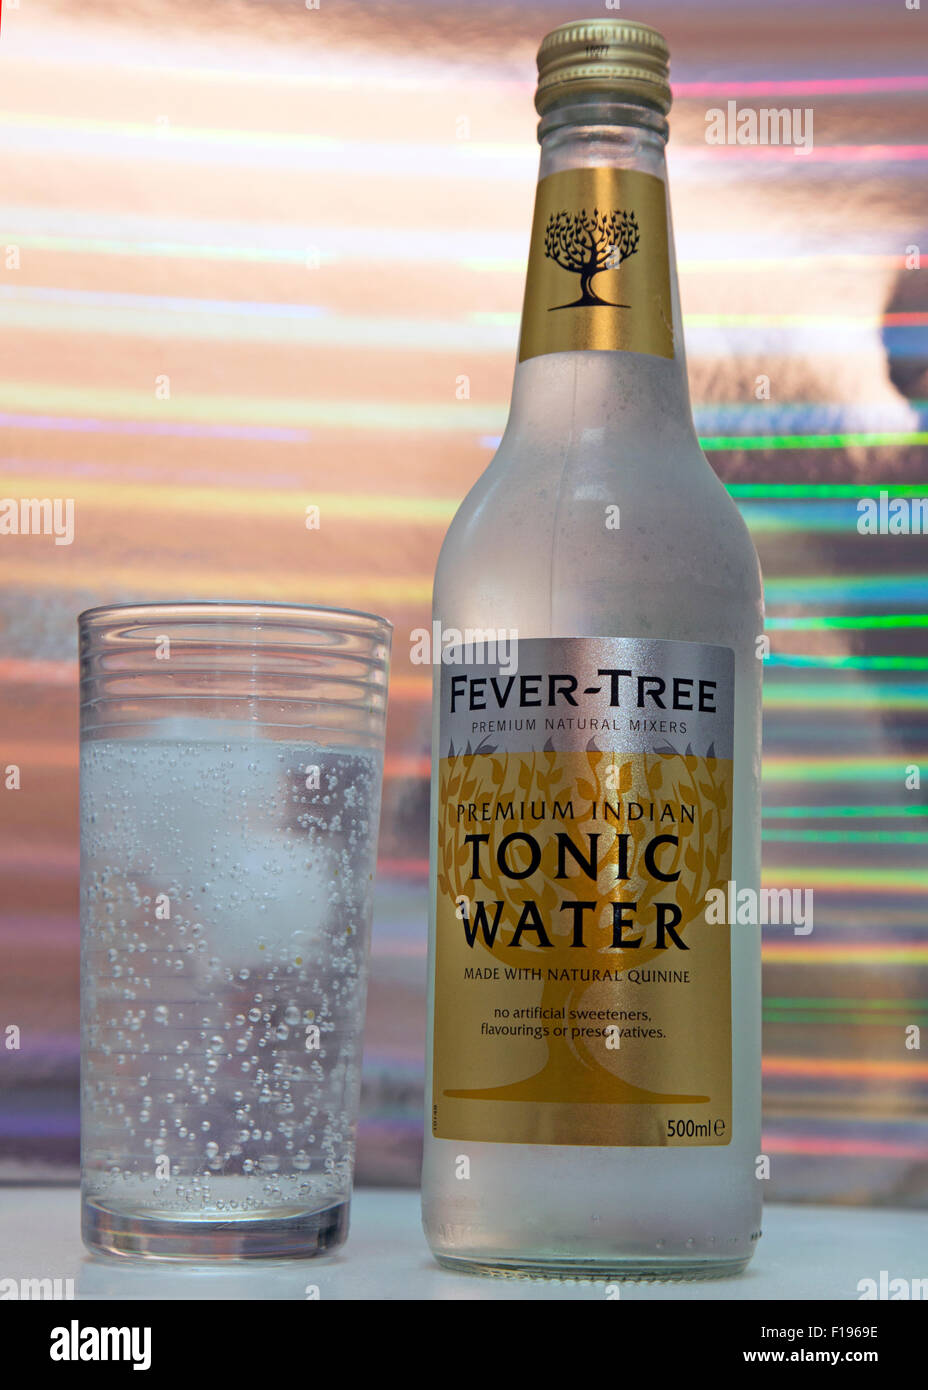 Fever-Tree premium Indian tonic water, London Stock Photo